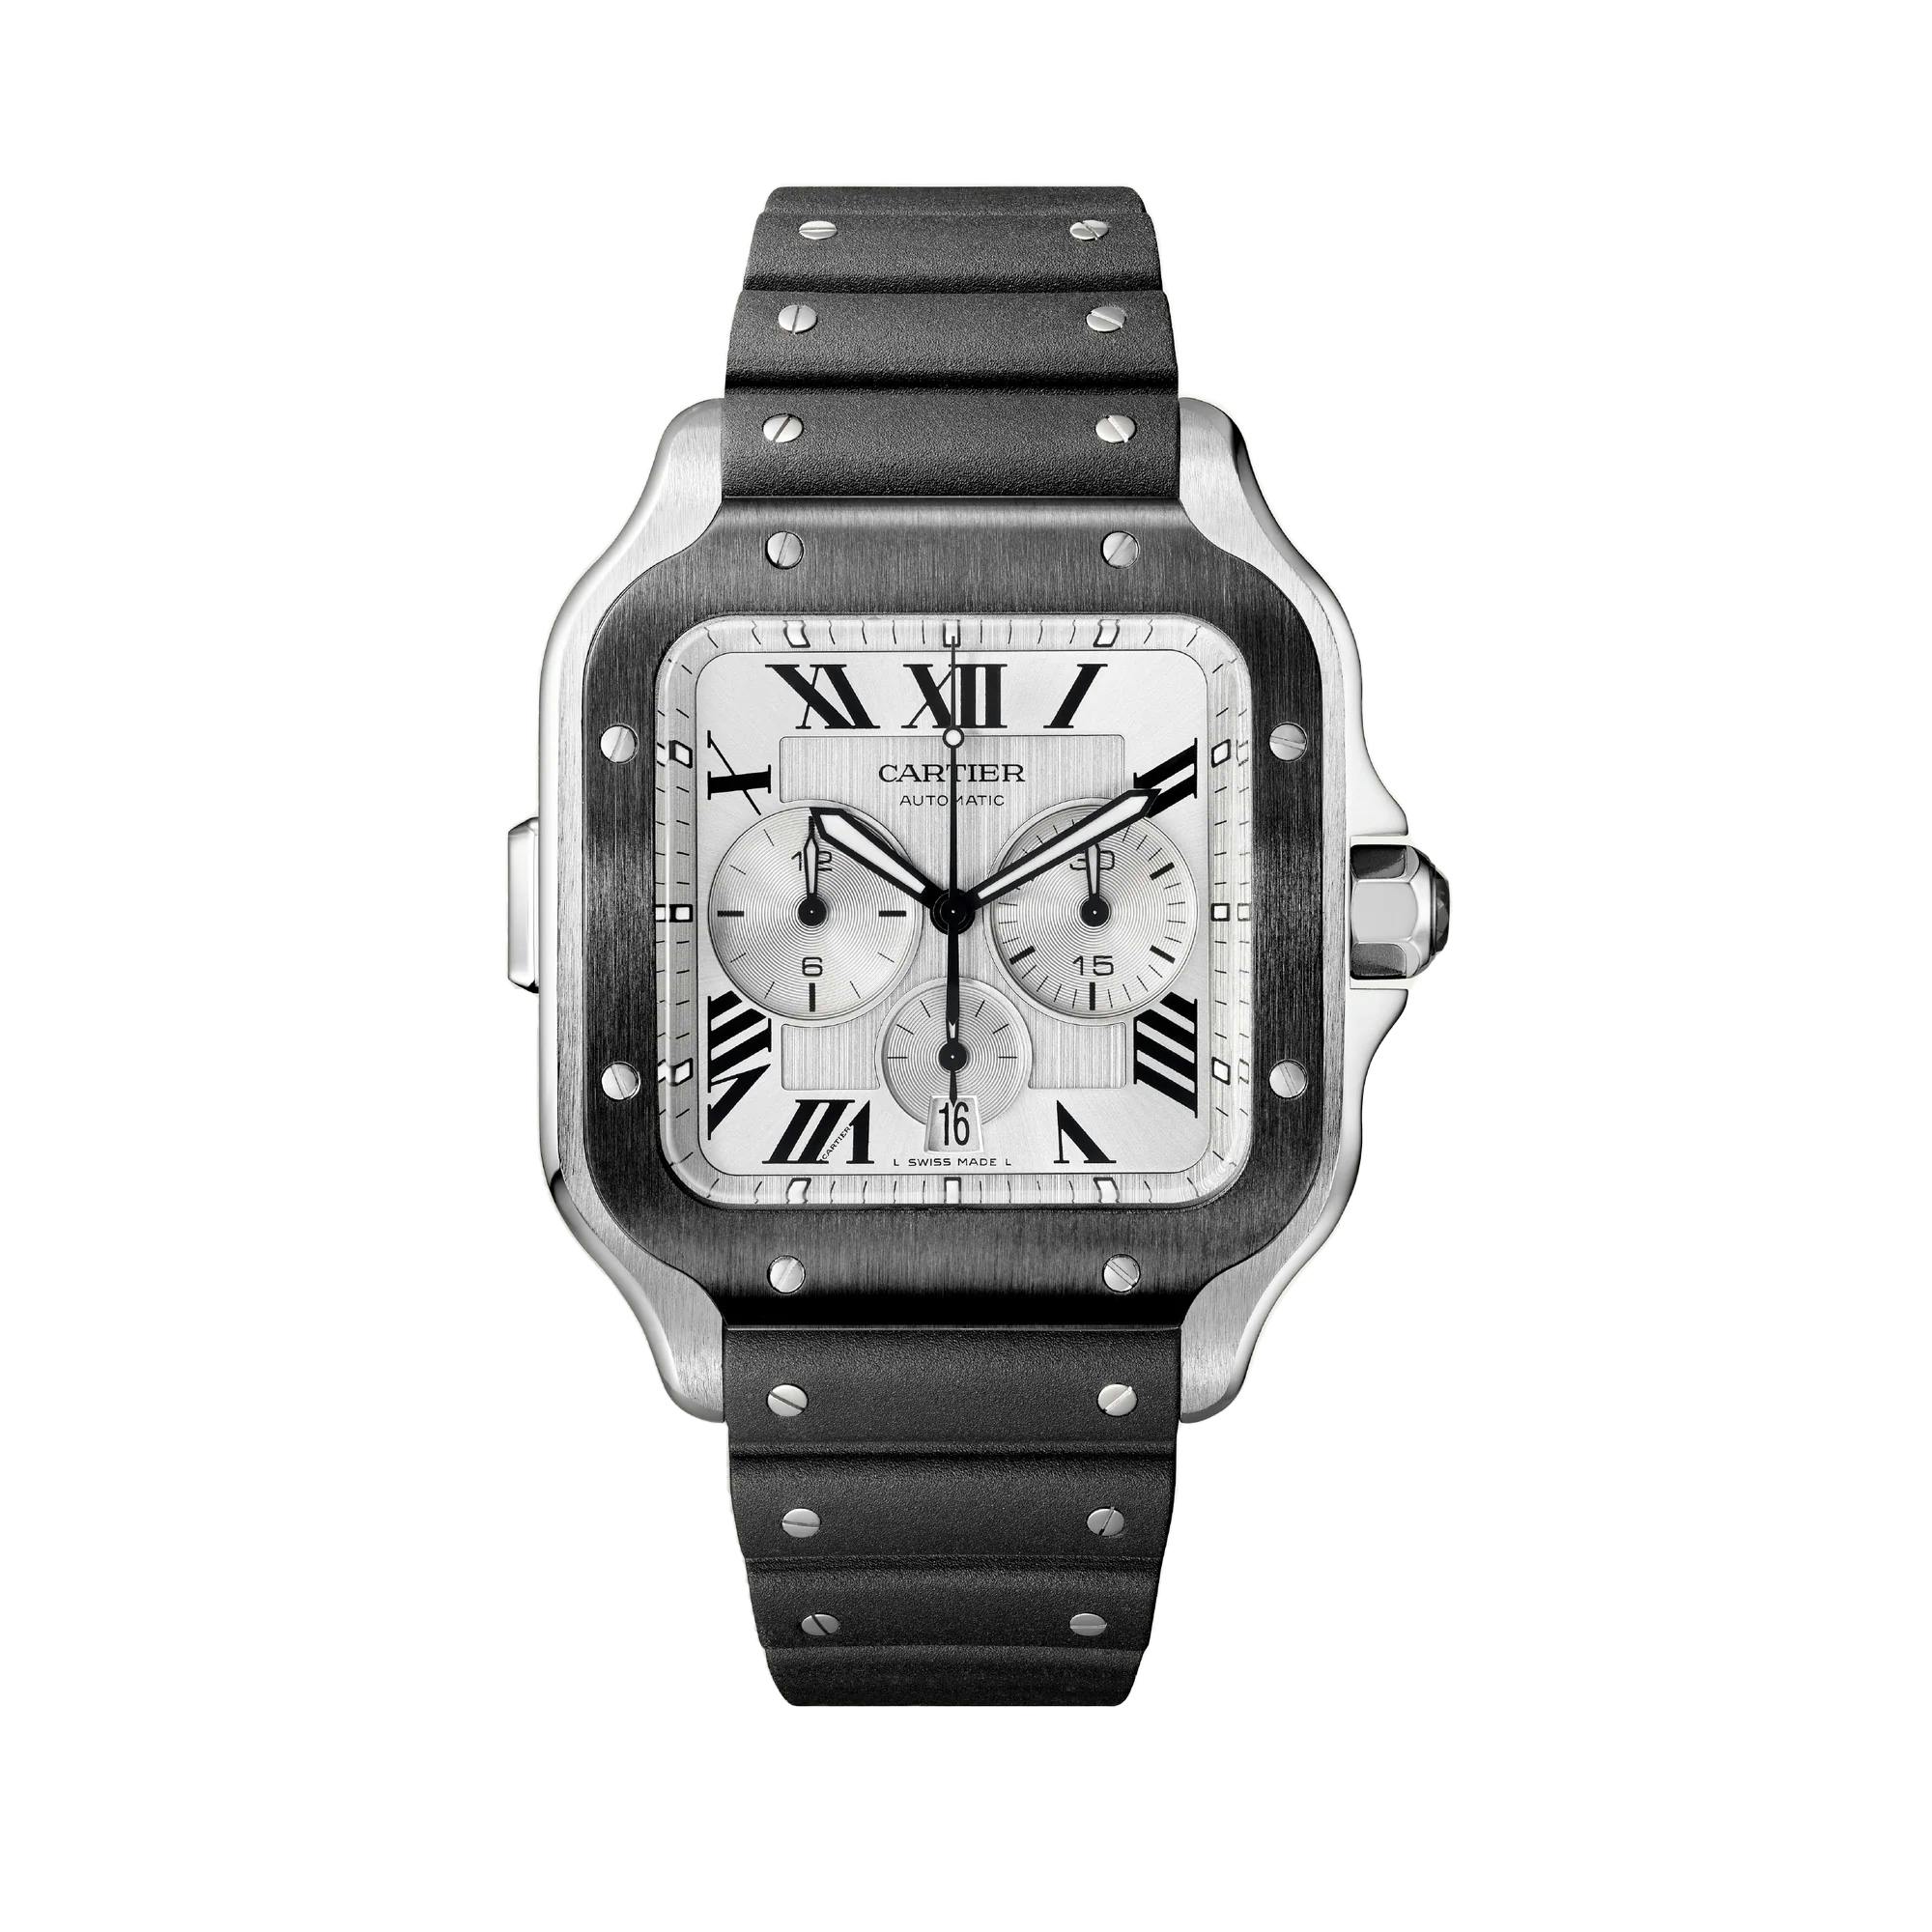 Santos de Cartier Chronograph Watch in Black, extra large model 0